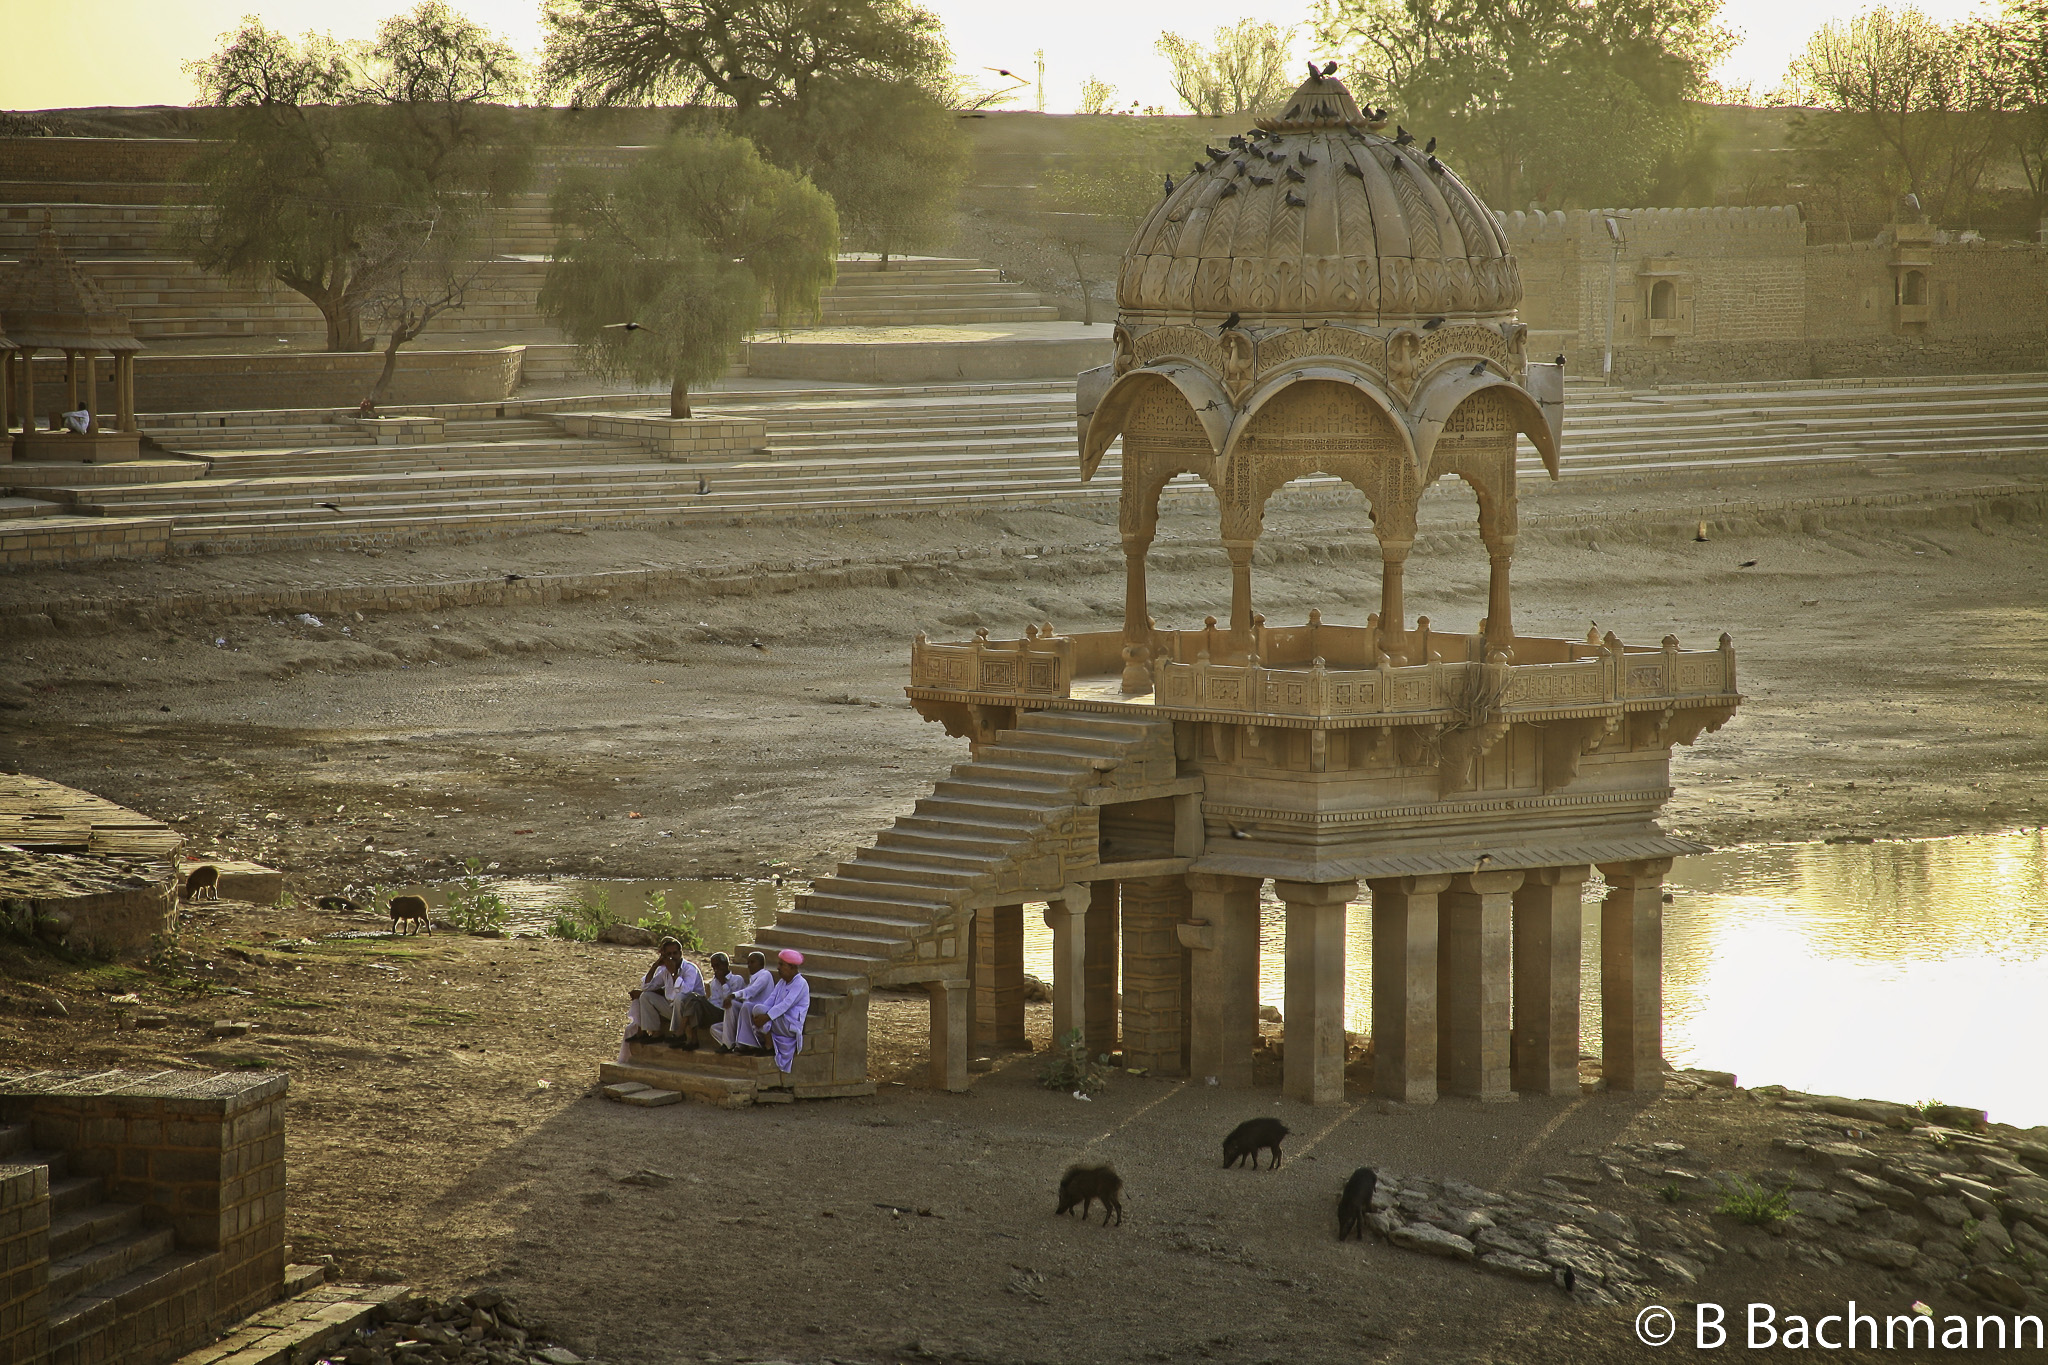 202210_Jaisalmer.jpg